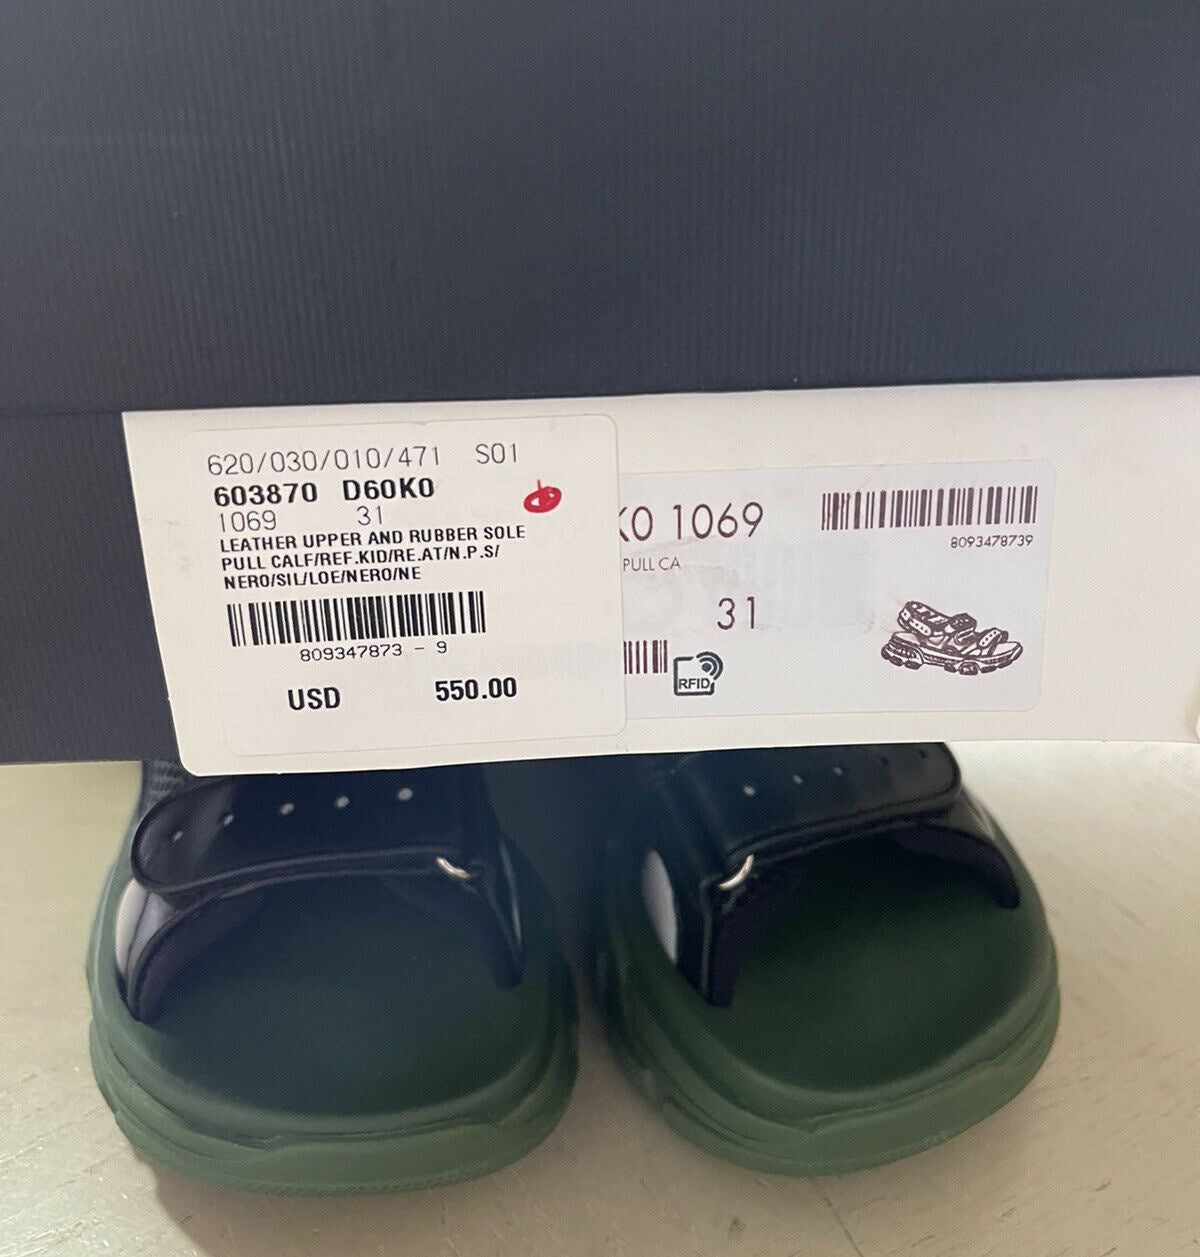 NIB $ 1100 Gucci Kinder-Leder-Sandalenschuhe Schwarz/Grün Größe 31/13 US Alter 6